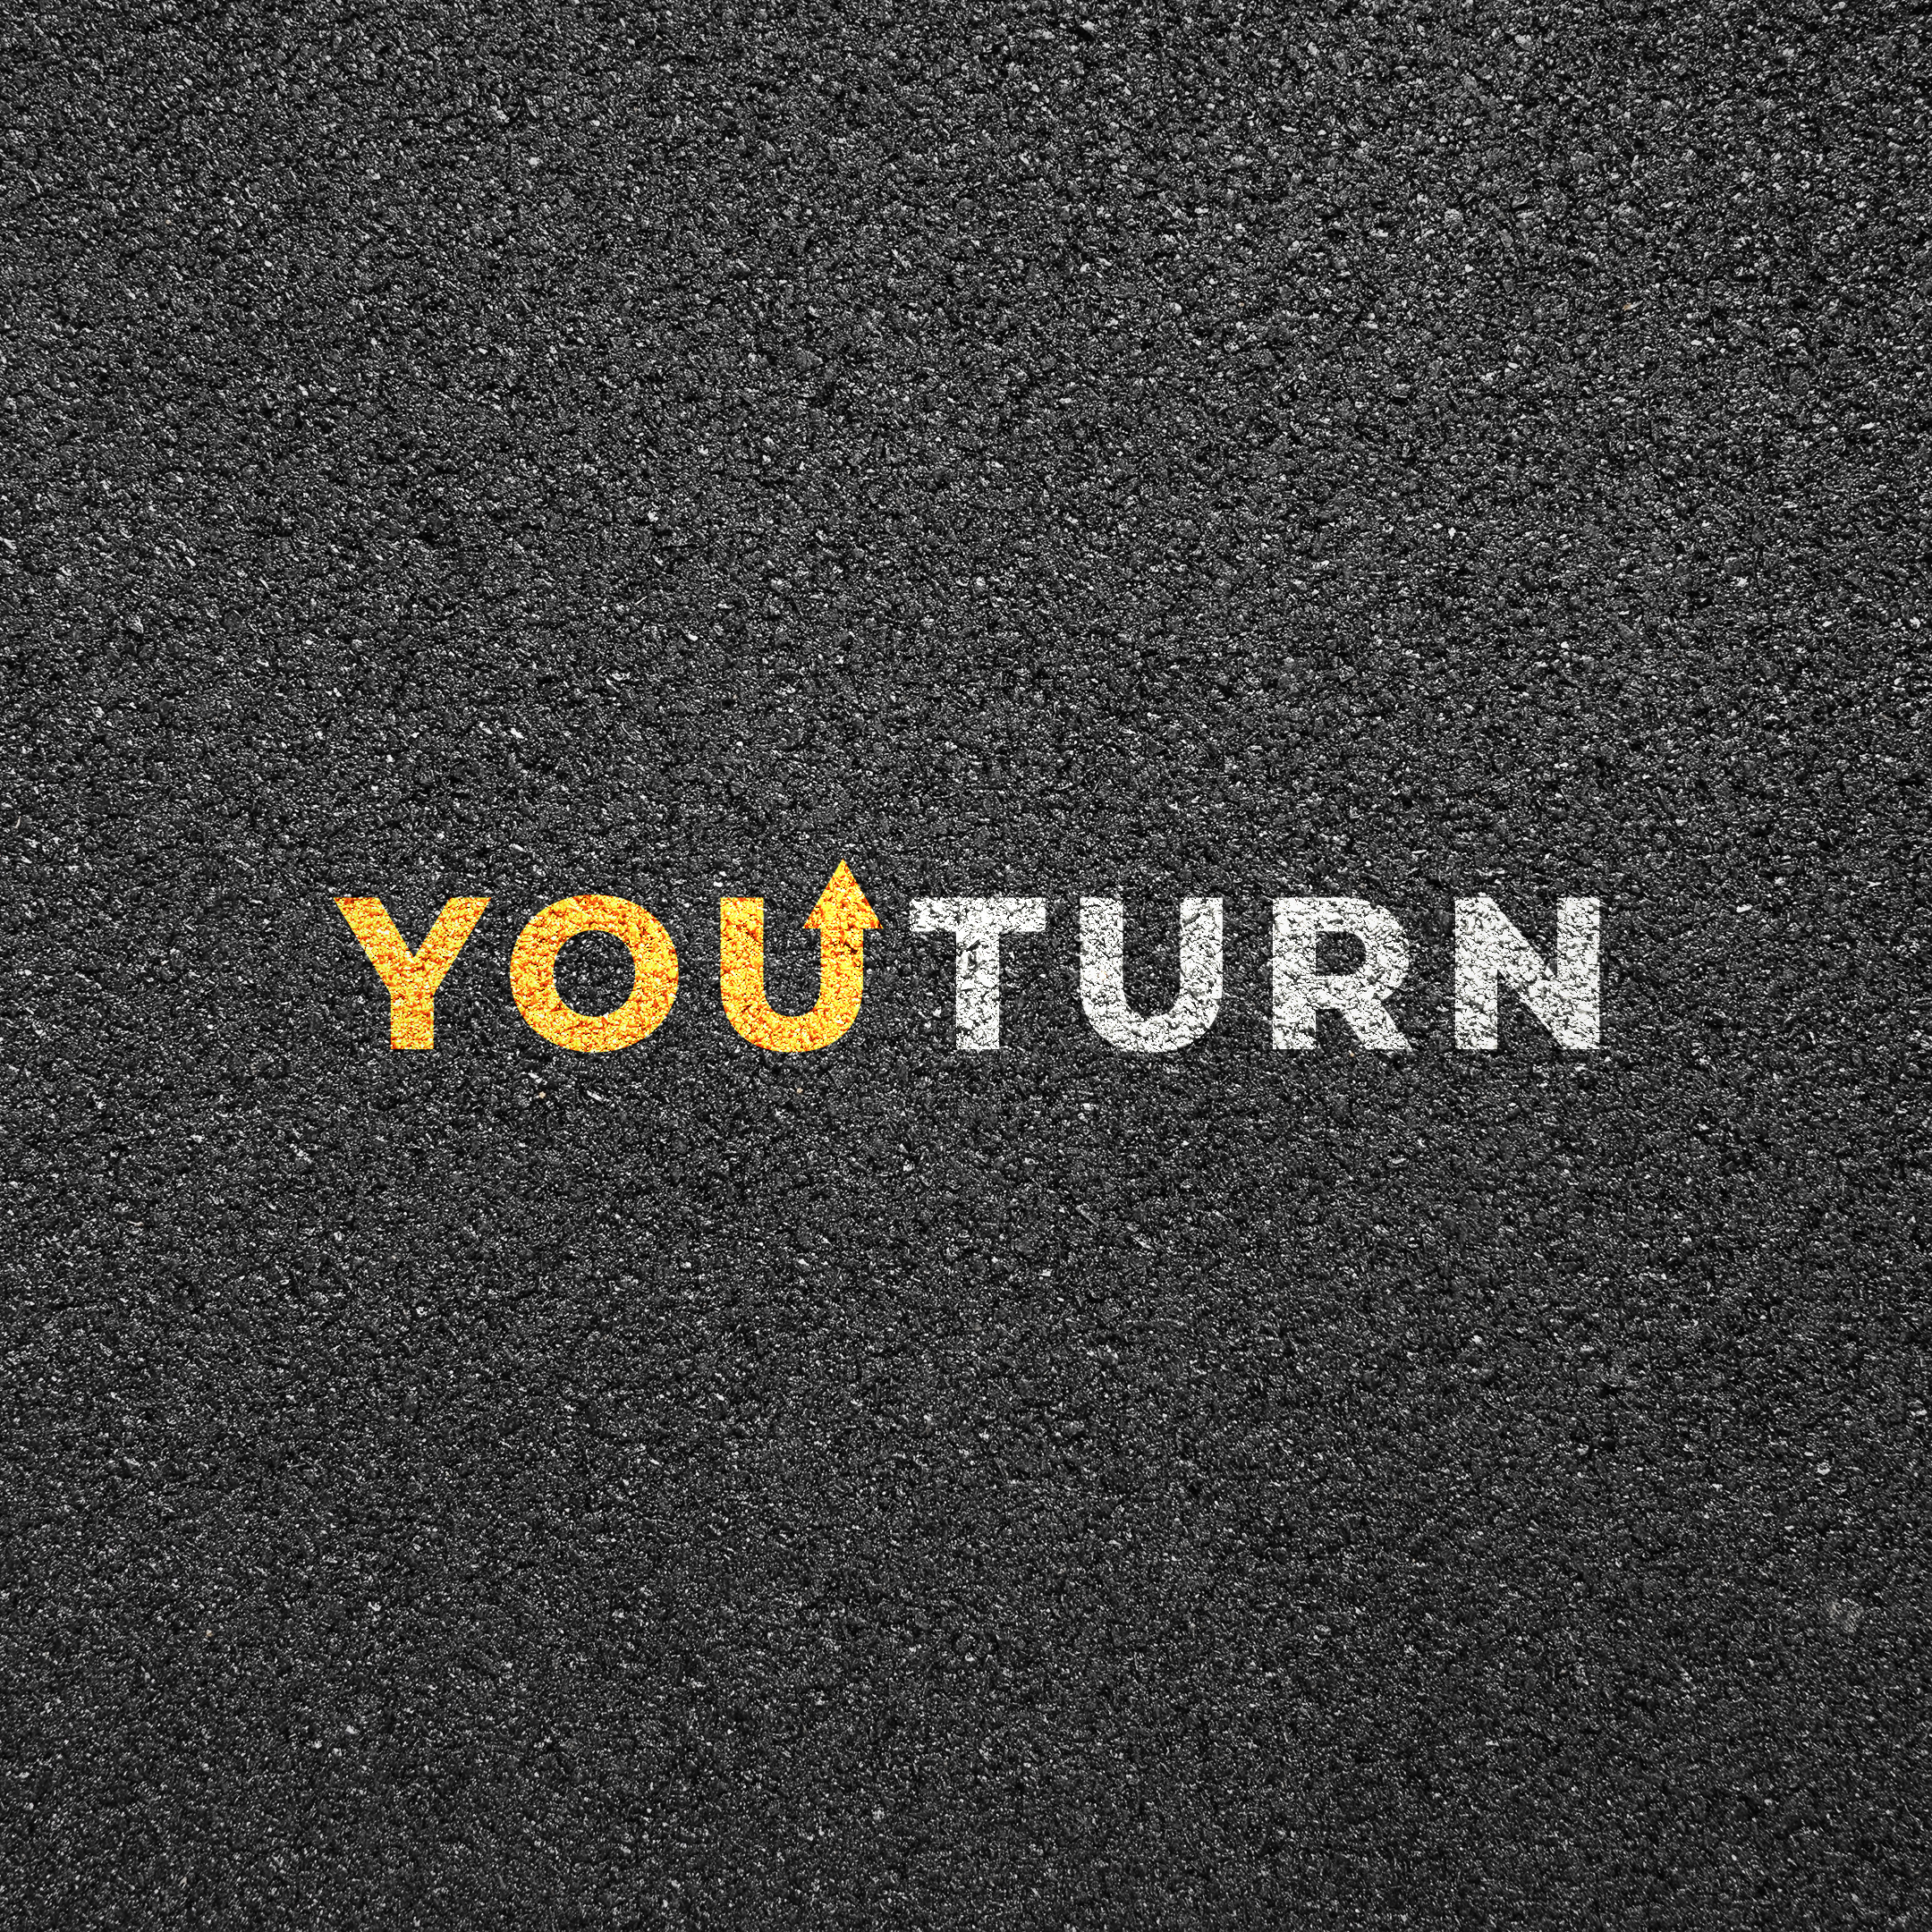 You Turn